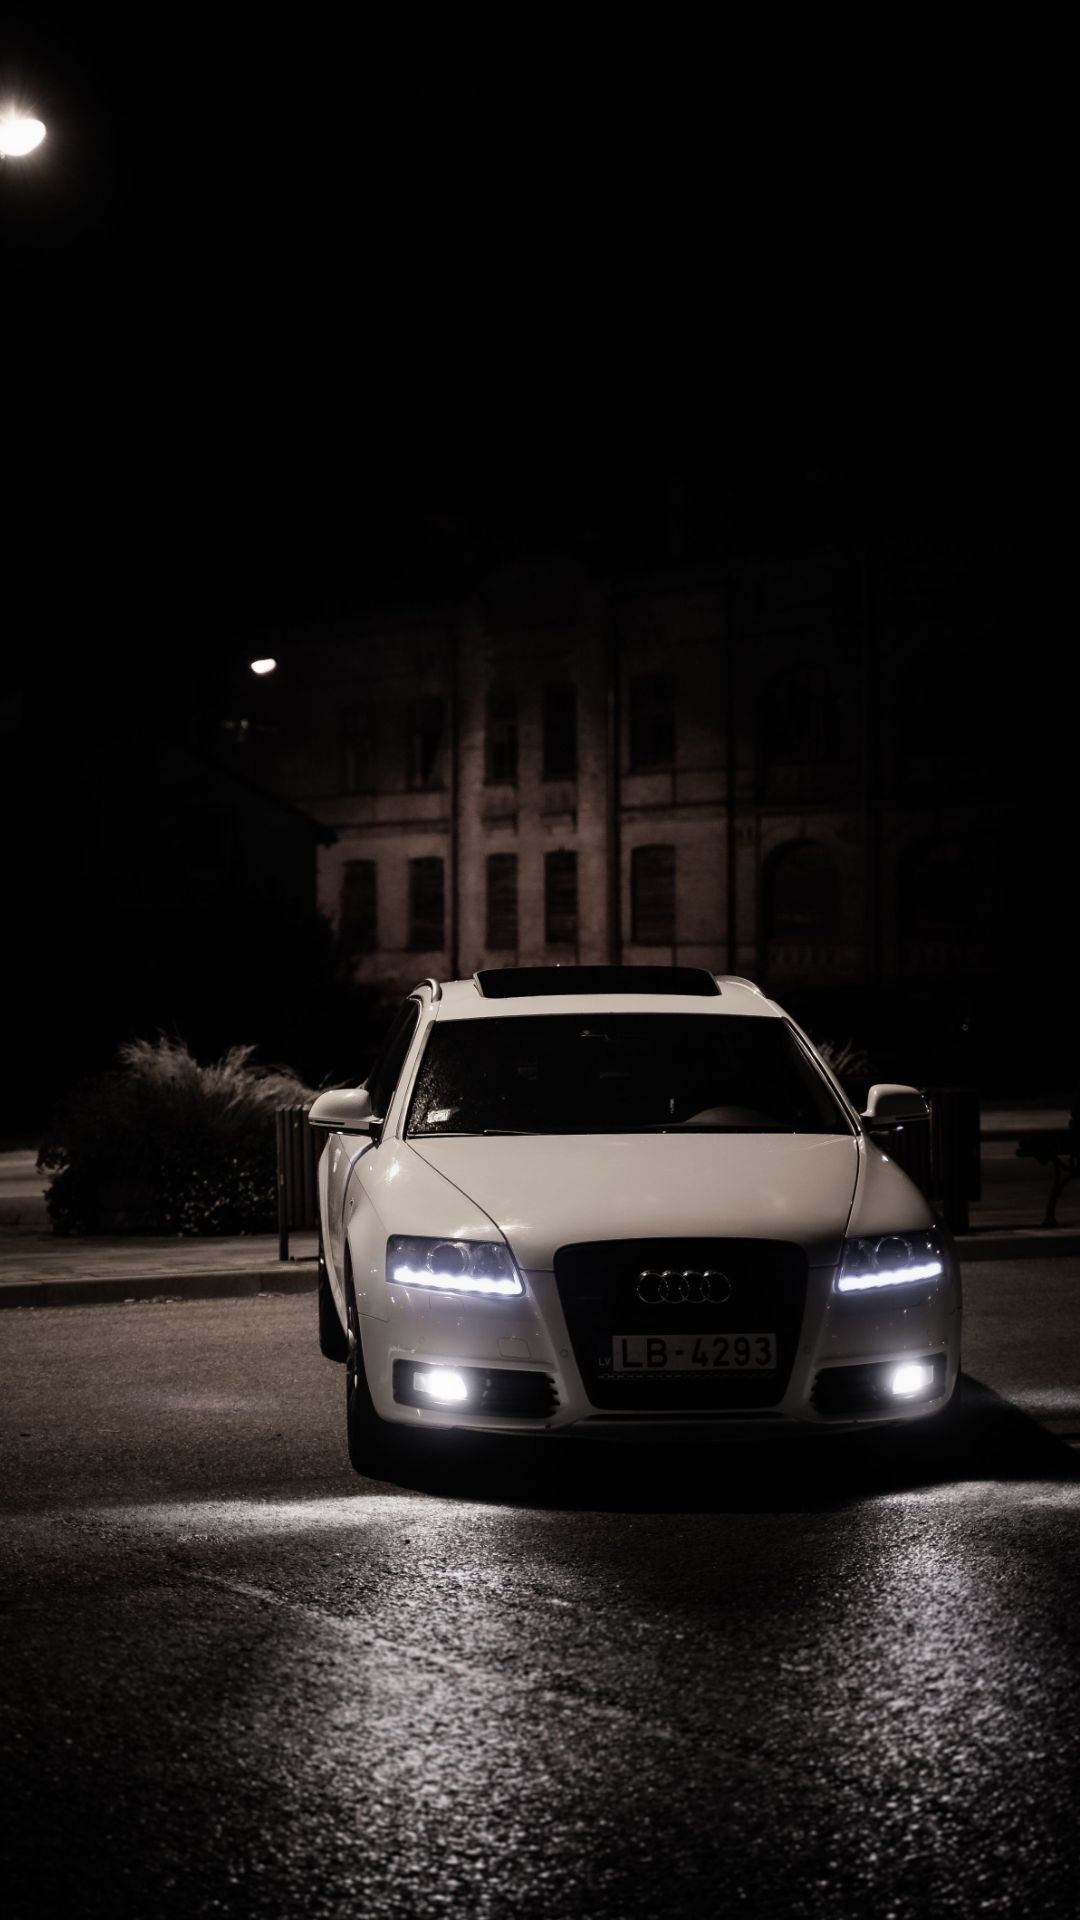 Audi A6 iPhone Wallpaper Download